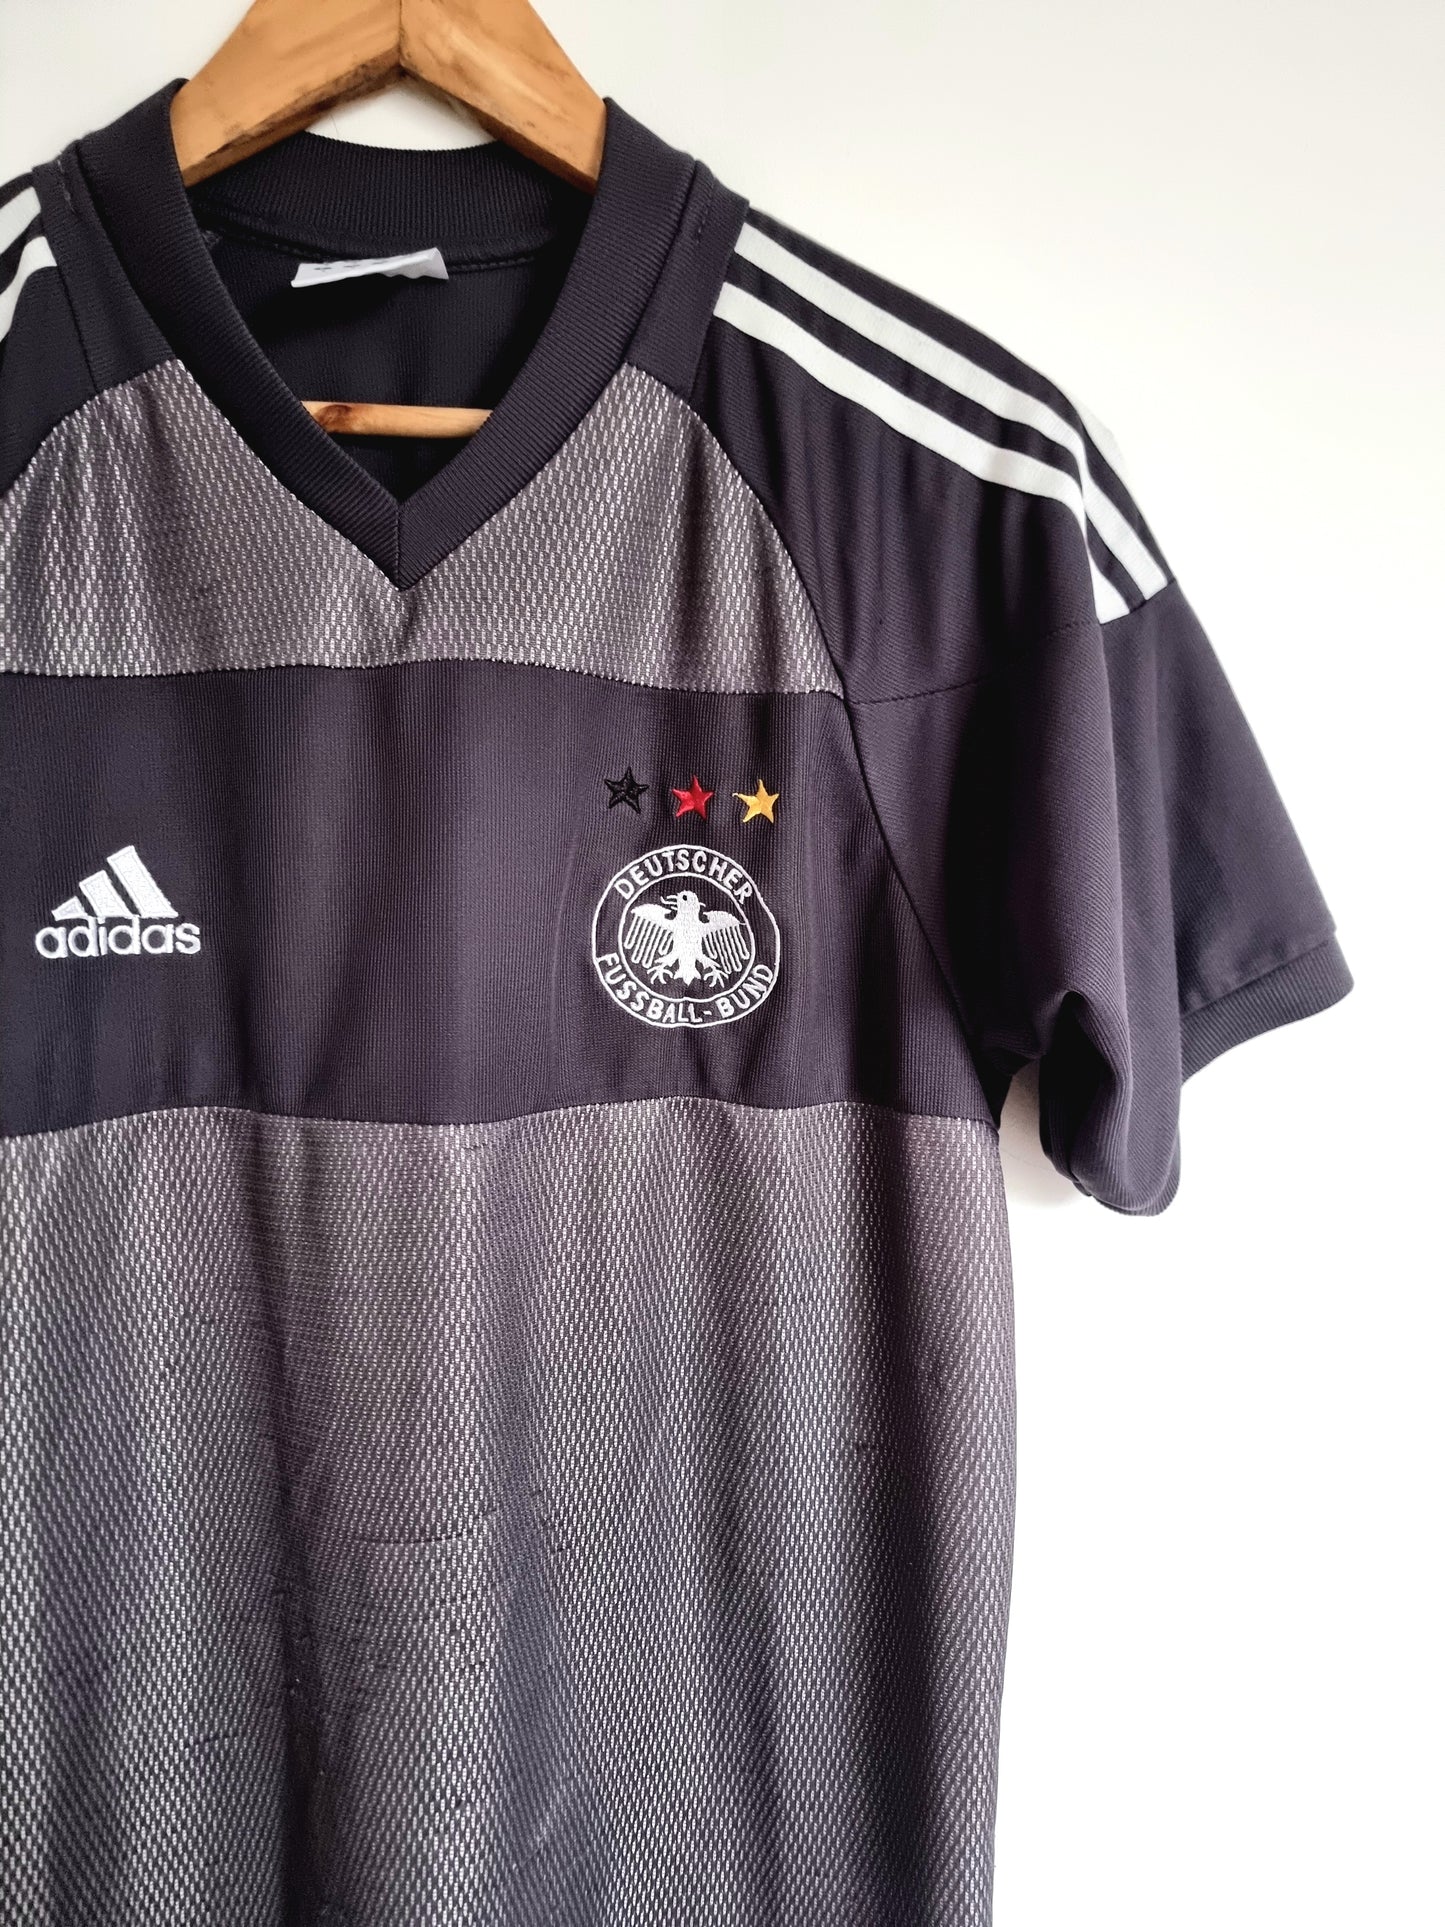 Adidas Germany 02/04 Away Shirt Small